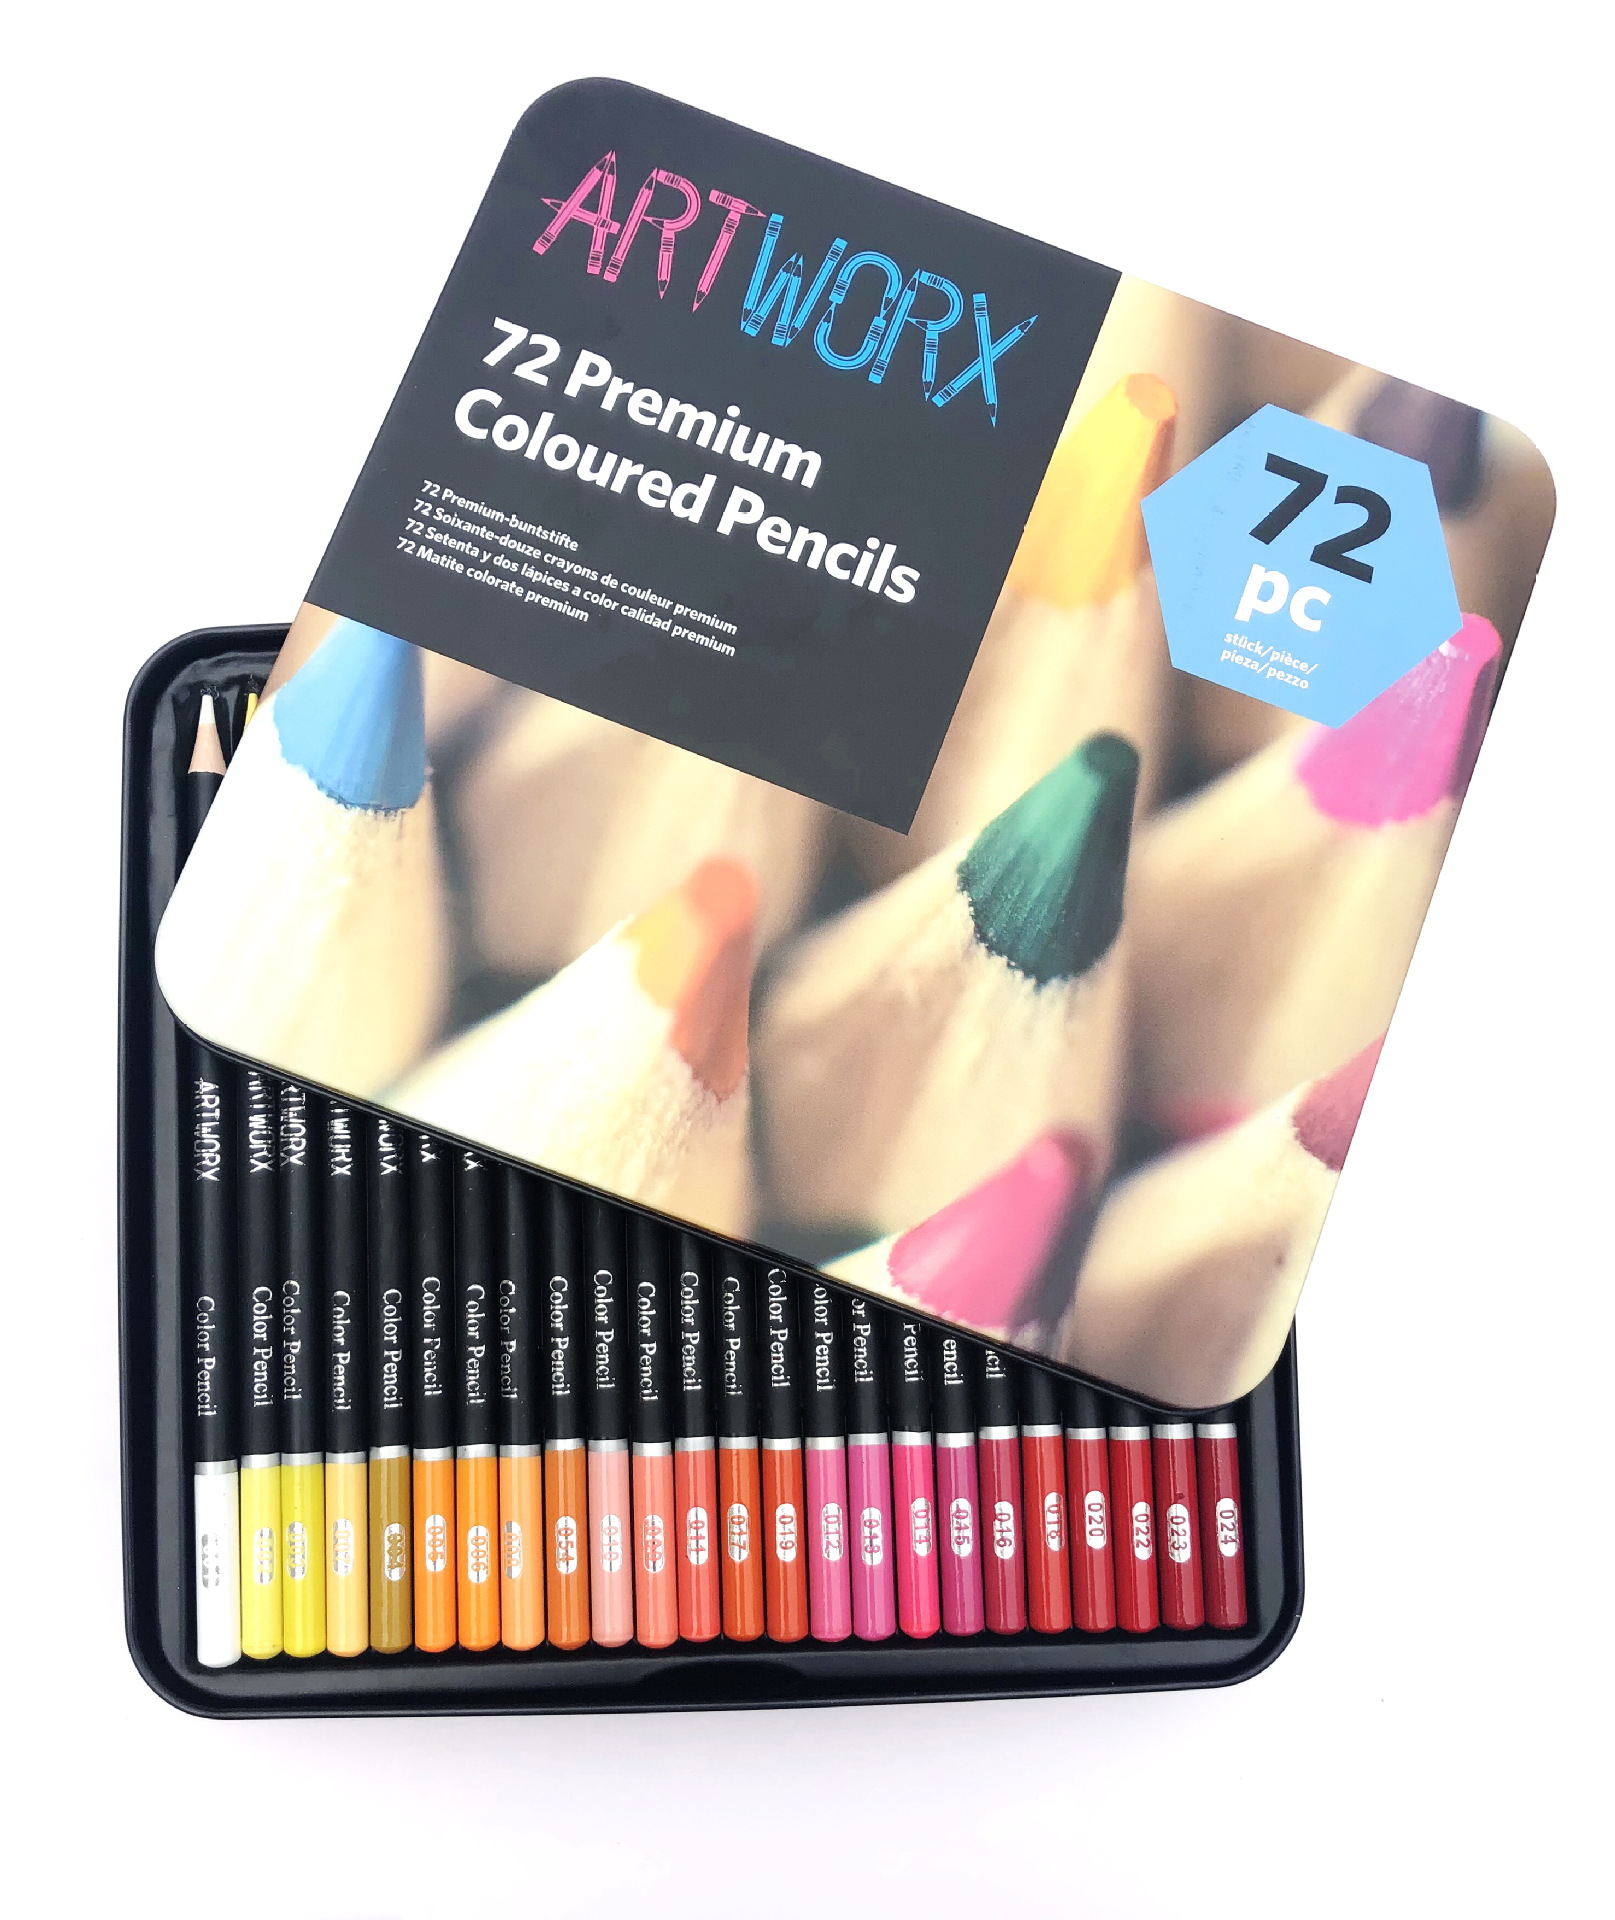 72 color lead iron box / color pencil set / painting stationery set / art supplies/ colored pencils / art pencil